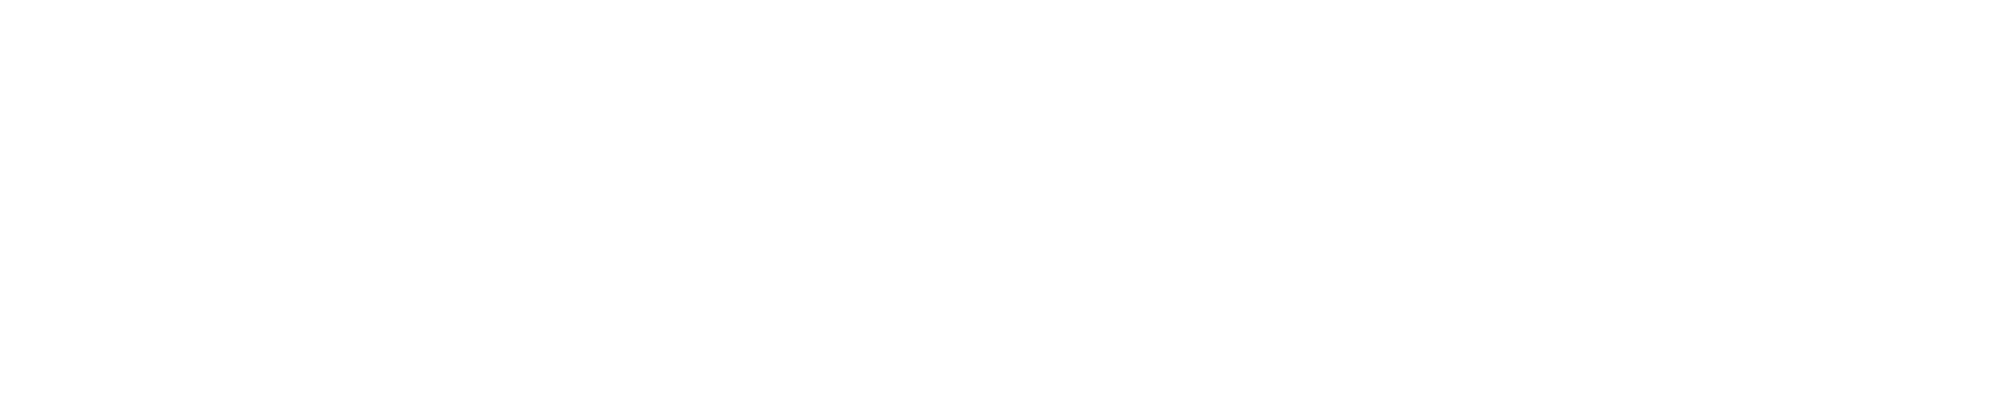 SvampGuiden Logo